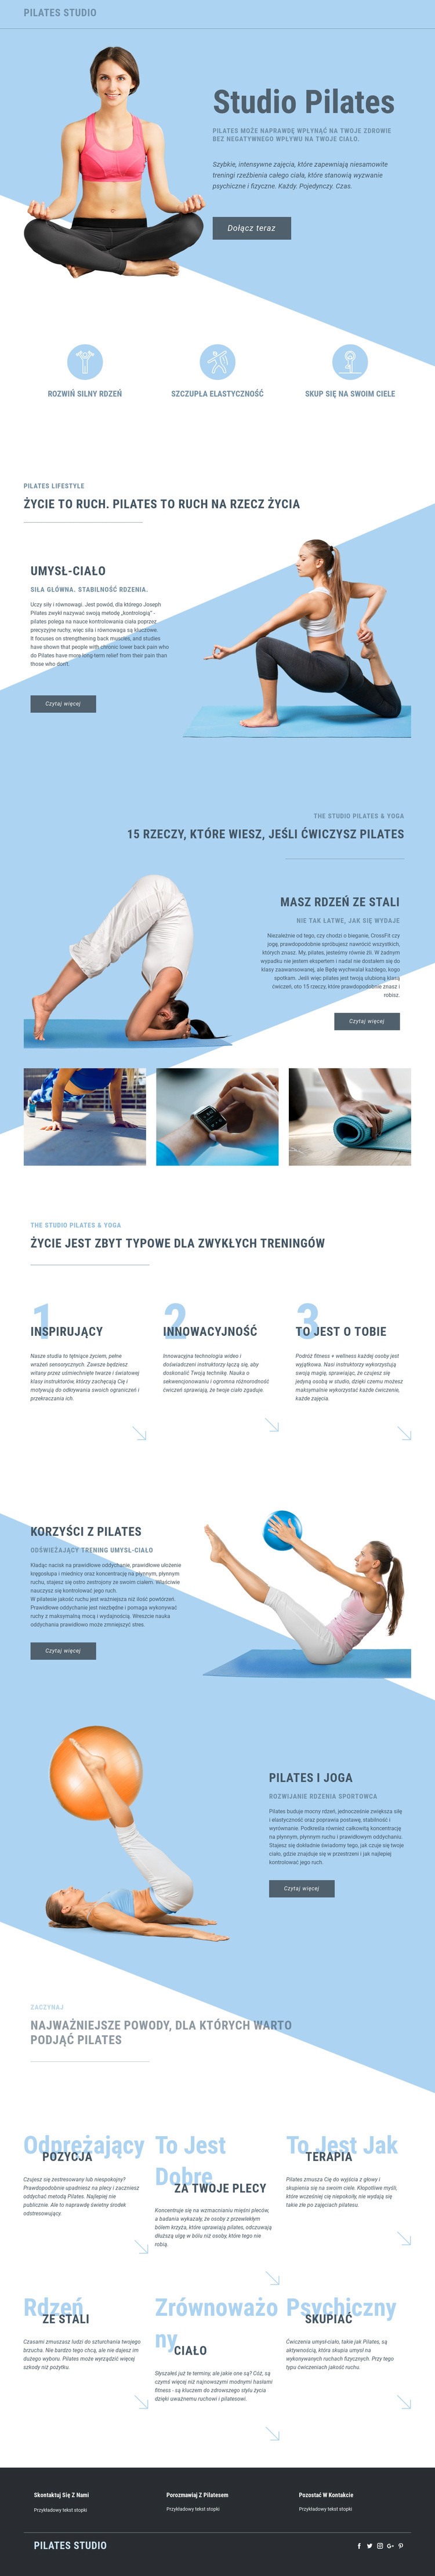 Studio pilates i sport Projekt strony internetowej